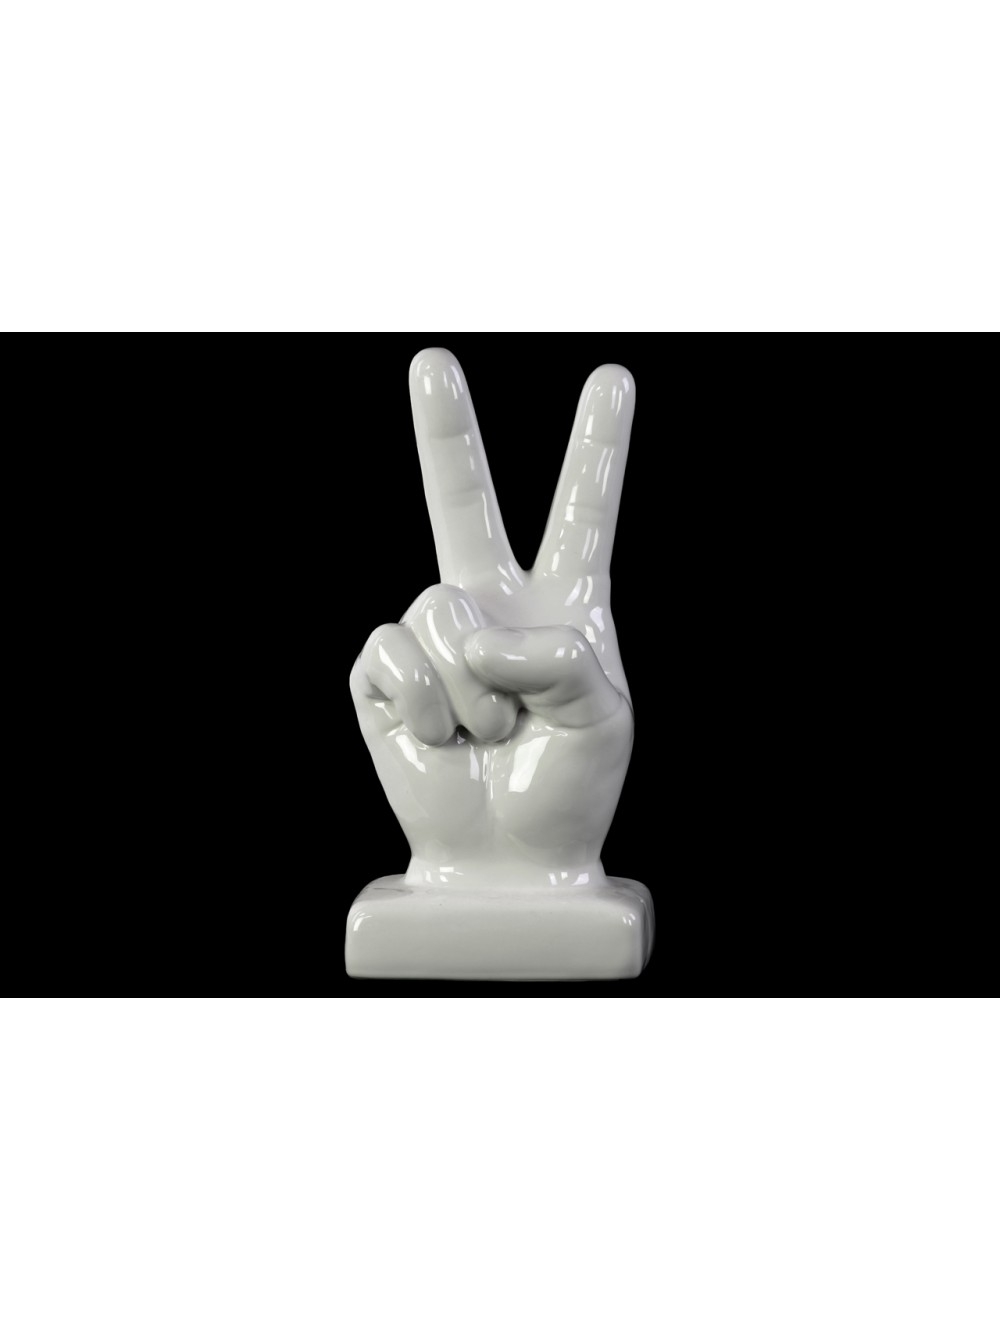 PEACE SIGN, WHITE - Image 0